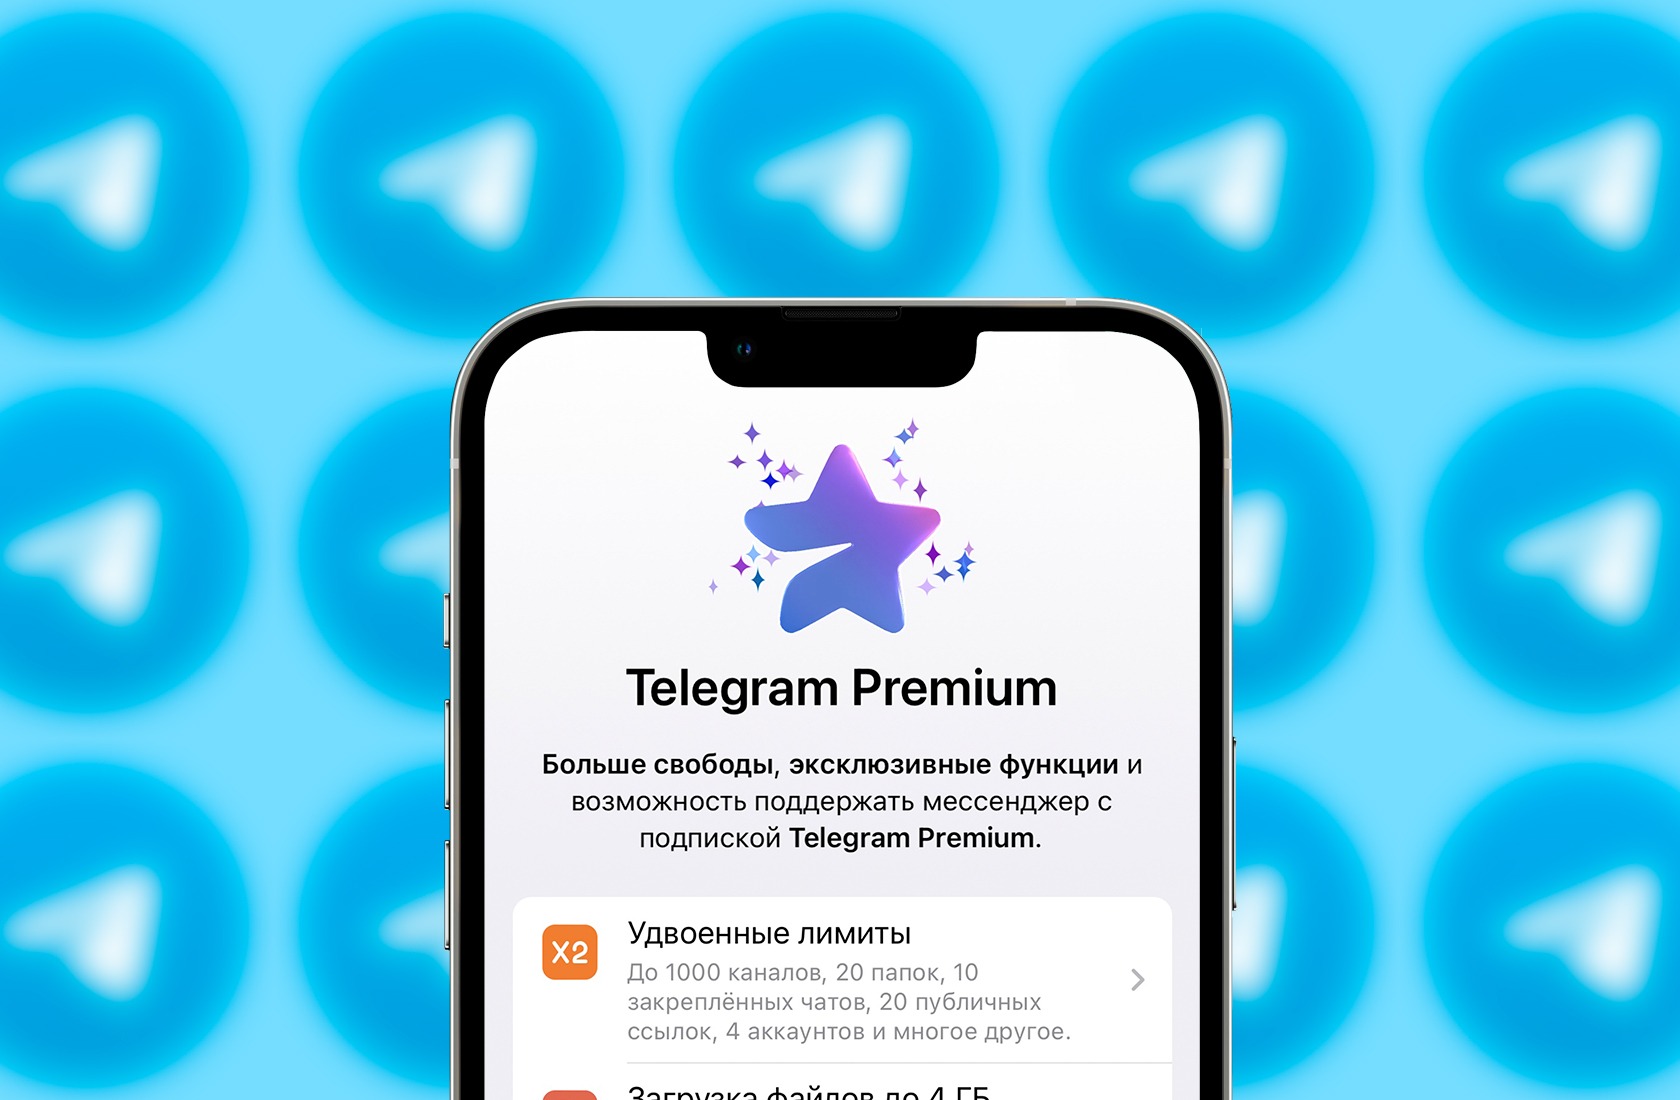 Telegram Премиум Telegraph